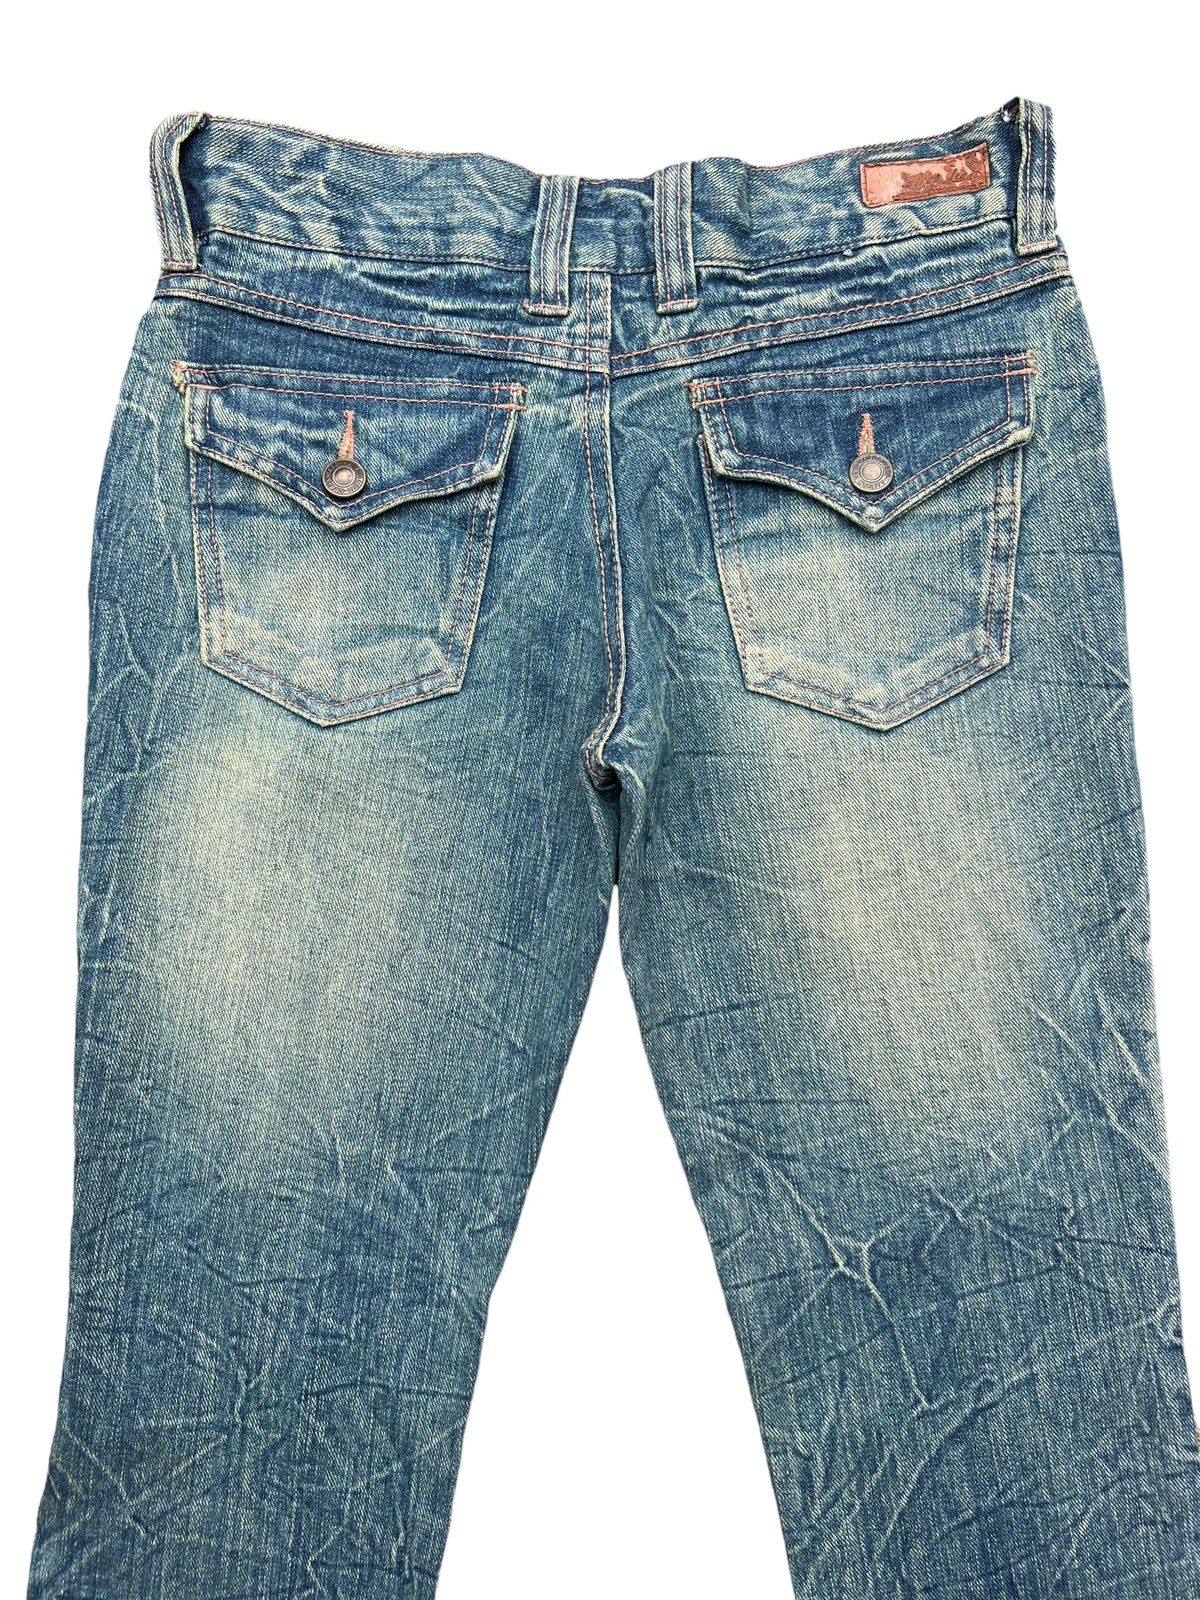 Hype - Japanese Brand Distressed Mudwash Flare Denim Jeans 28x30.5 - 5